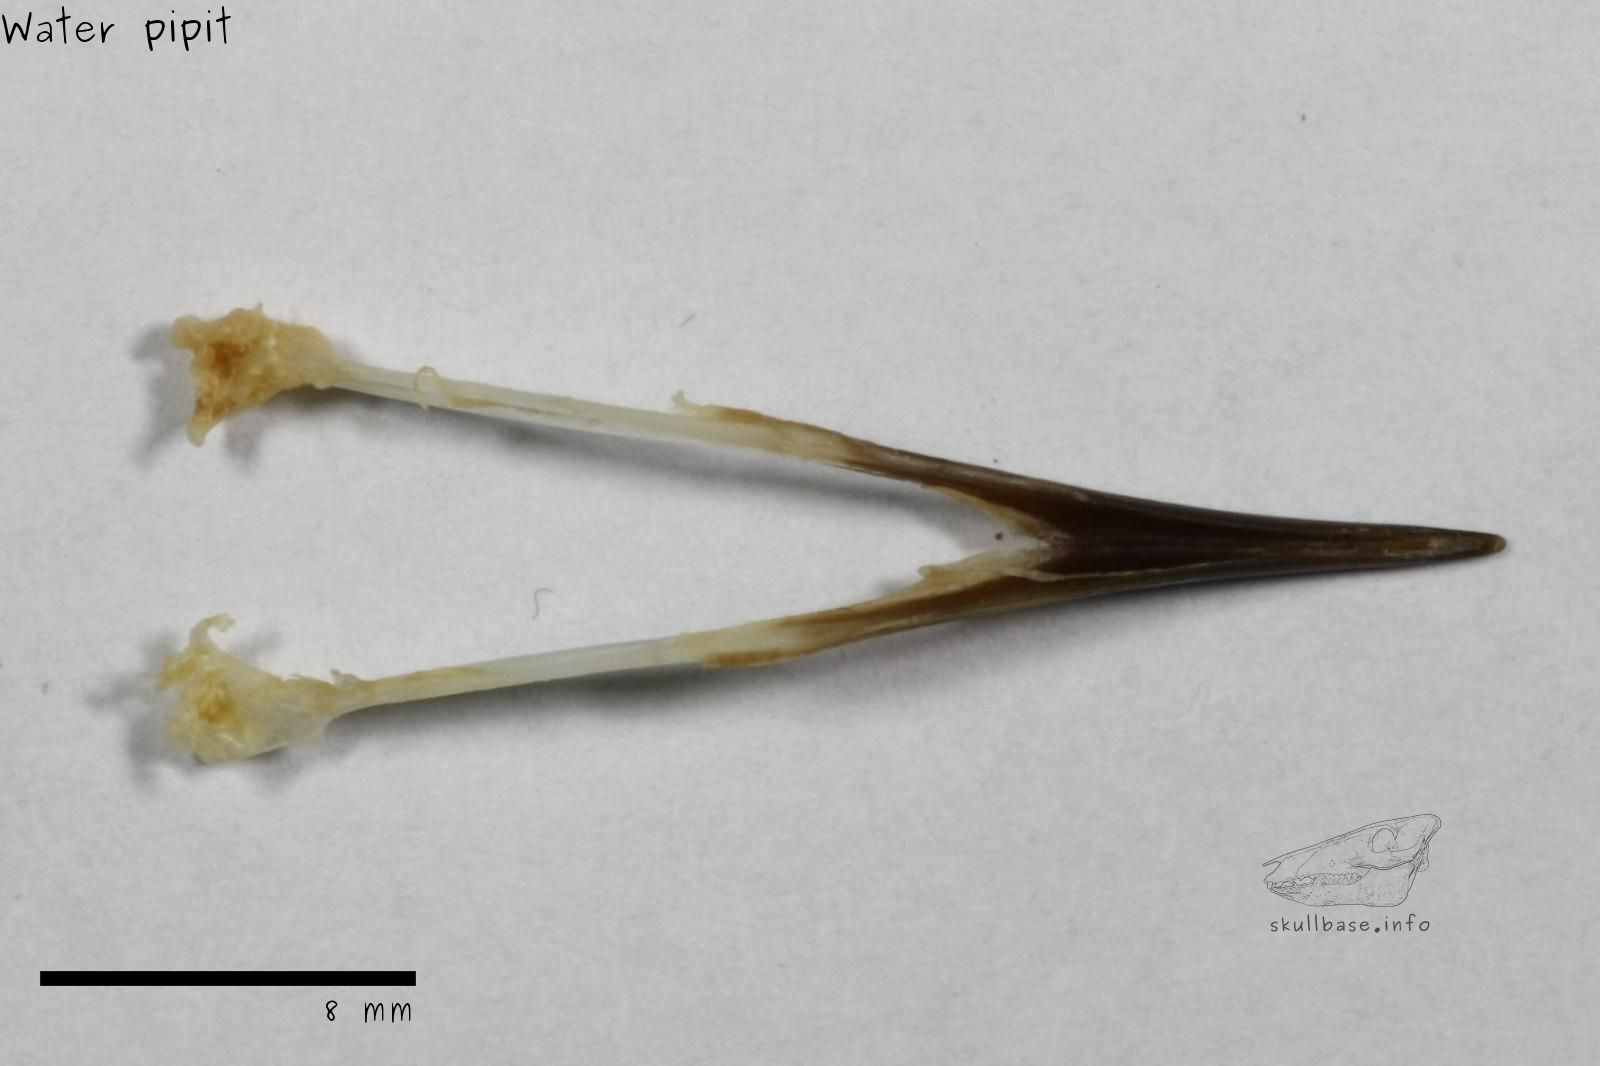 Water pipit (Anthus spinoletta) jaw